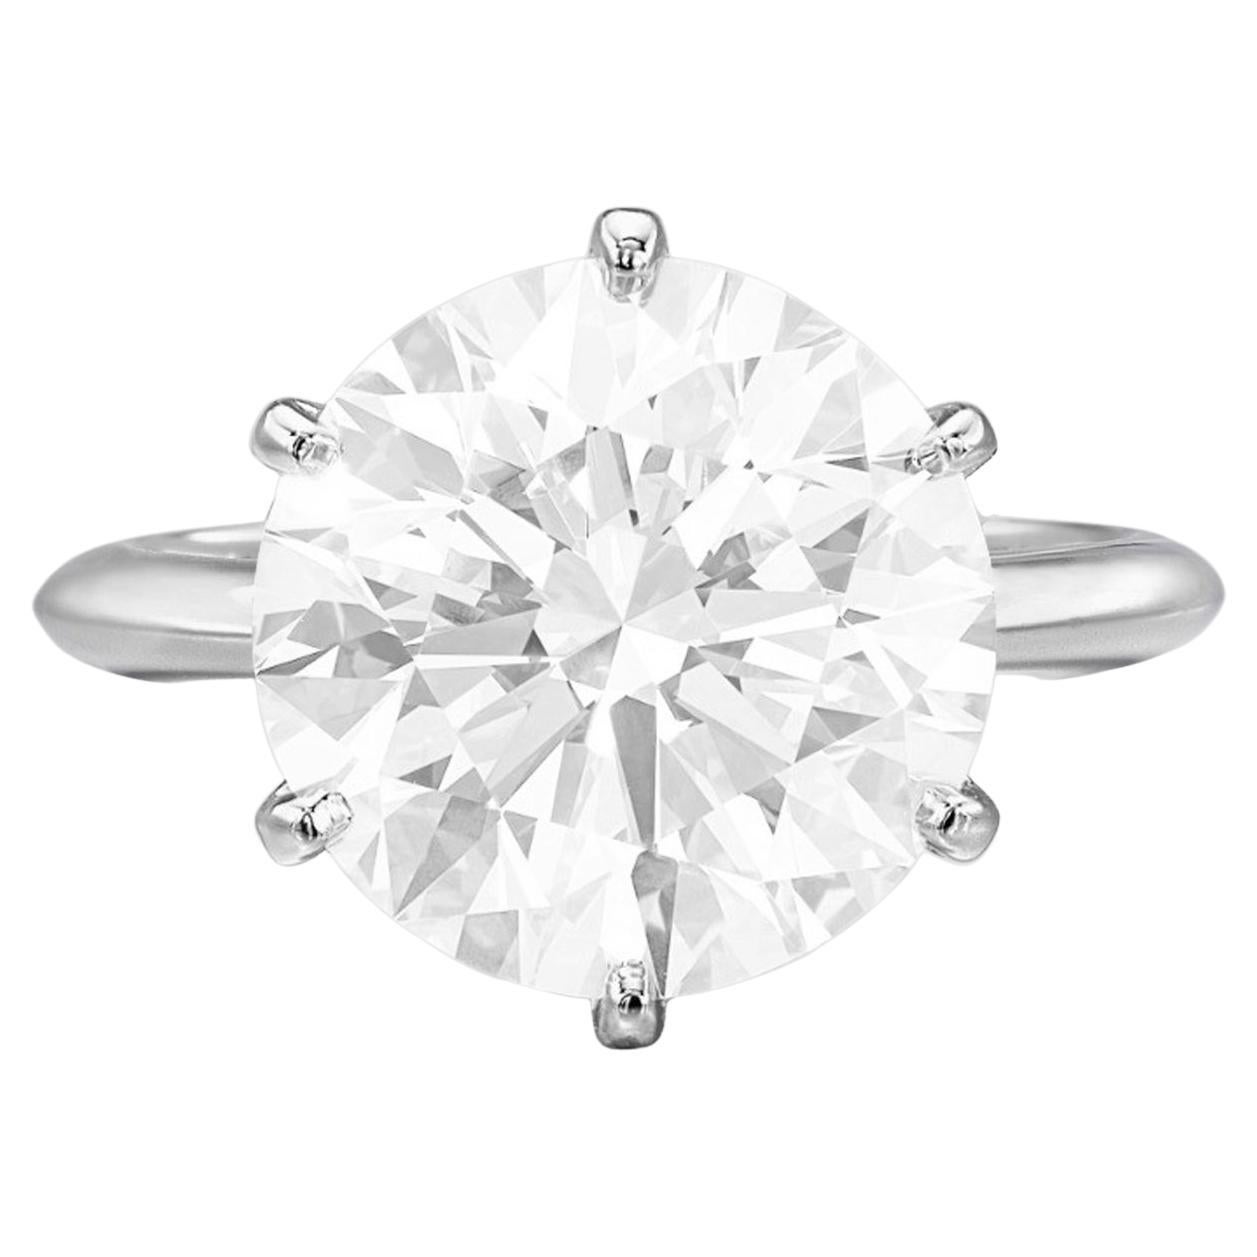 Tiffany & Co. 3.60 Karat Platin Diamant-Verlobungsring mit rundem Brillantschliff